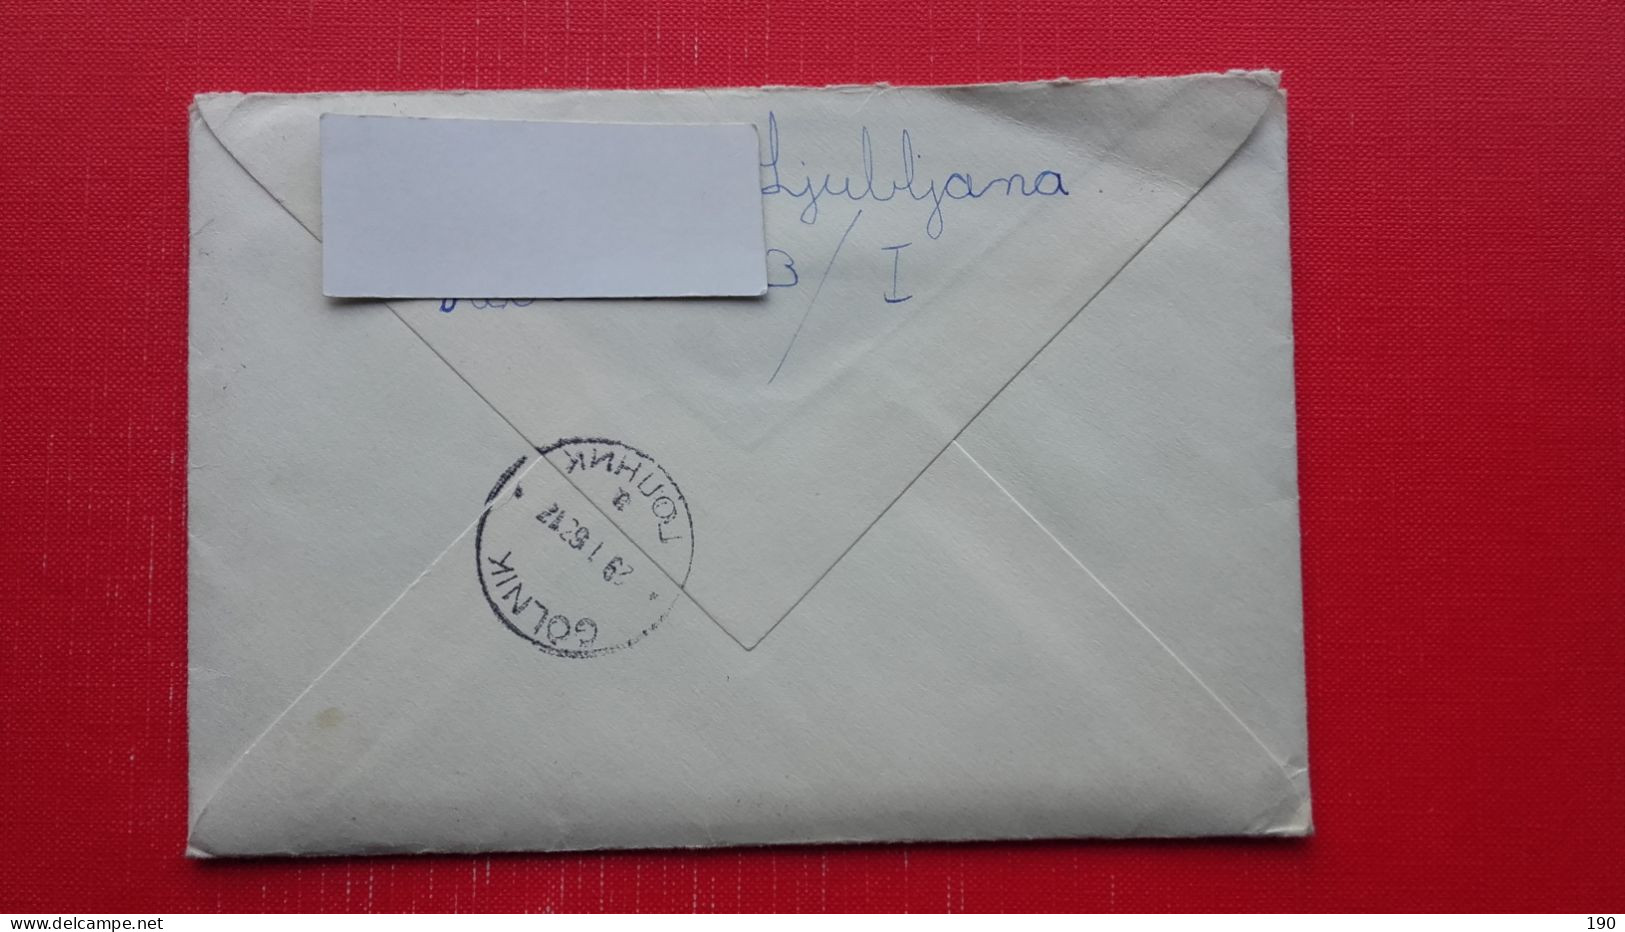 Letter Sent From Ljubljana To Golnik.Written By Child - Briefe U. Dokumente